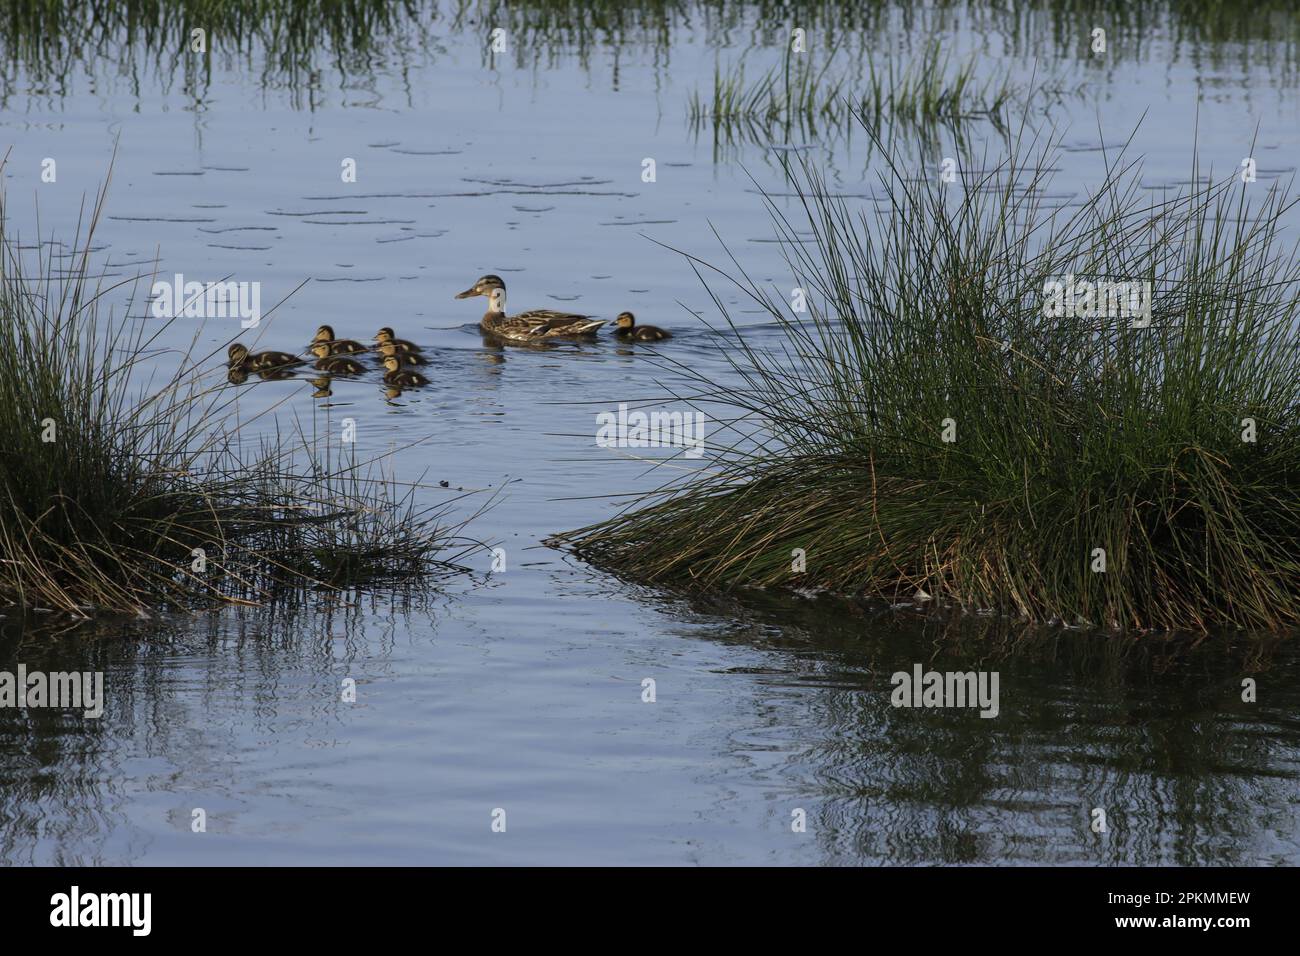 Family of ducks Stock Photo